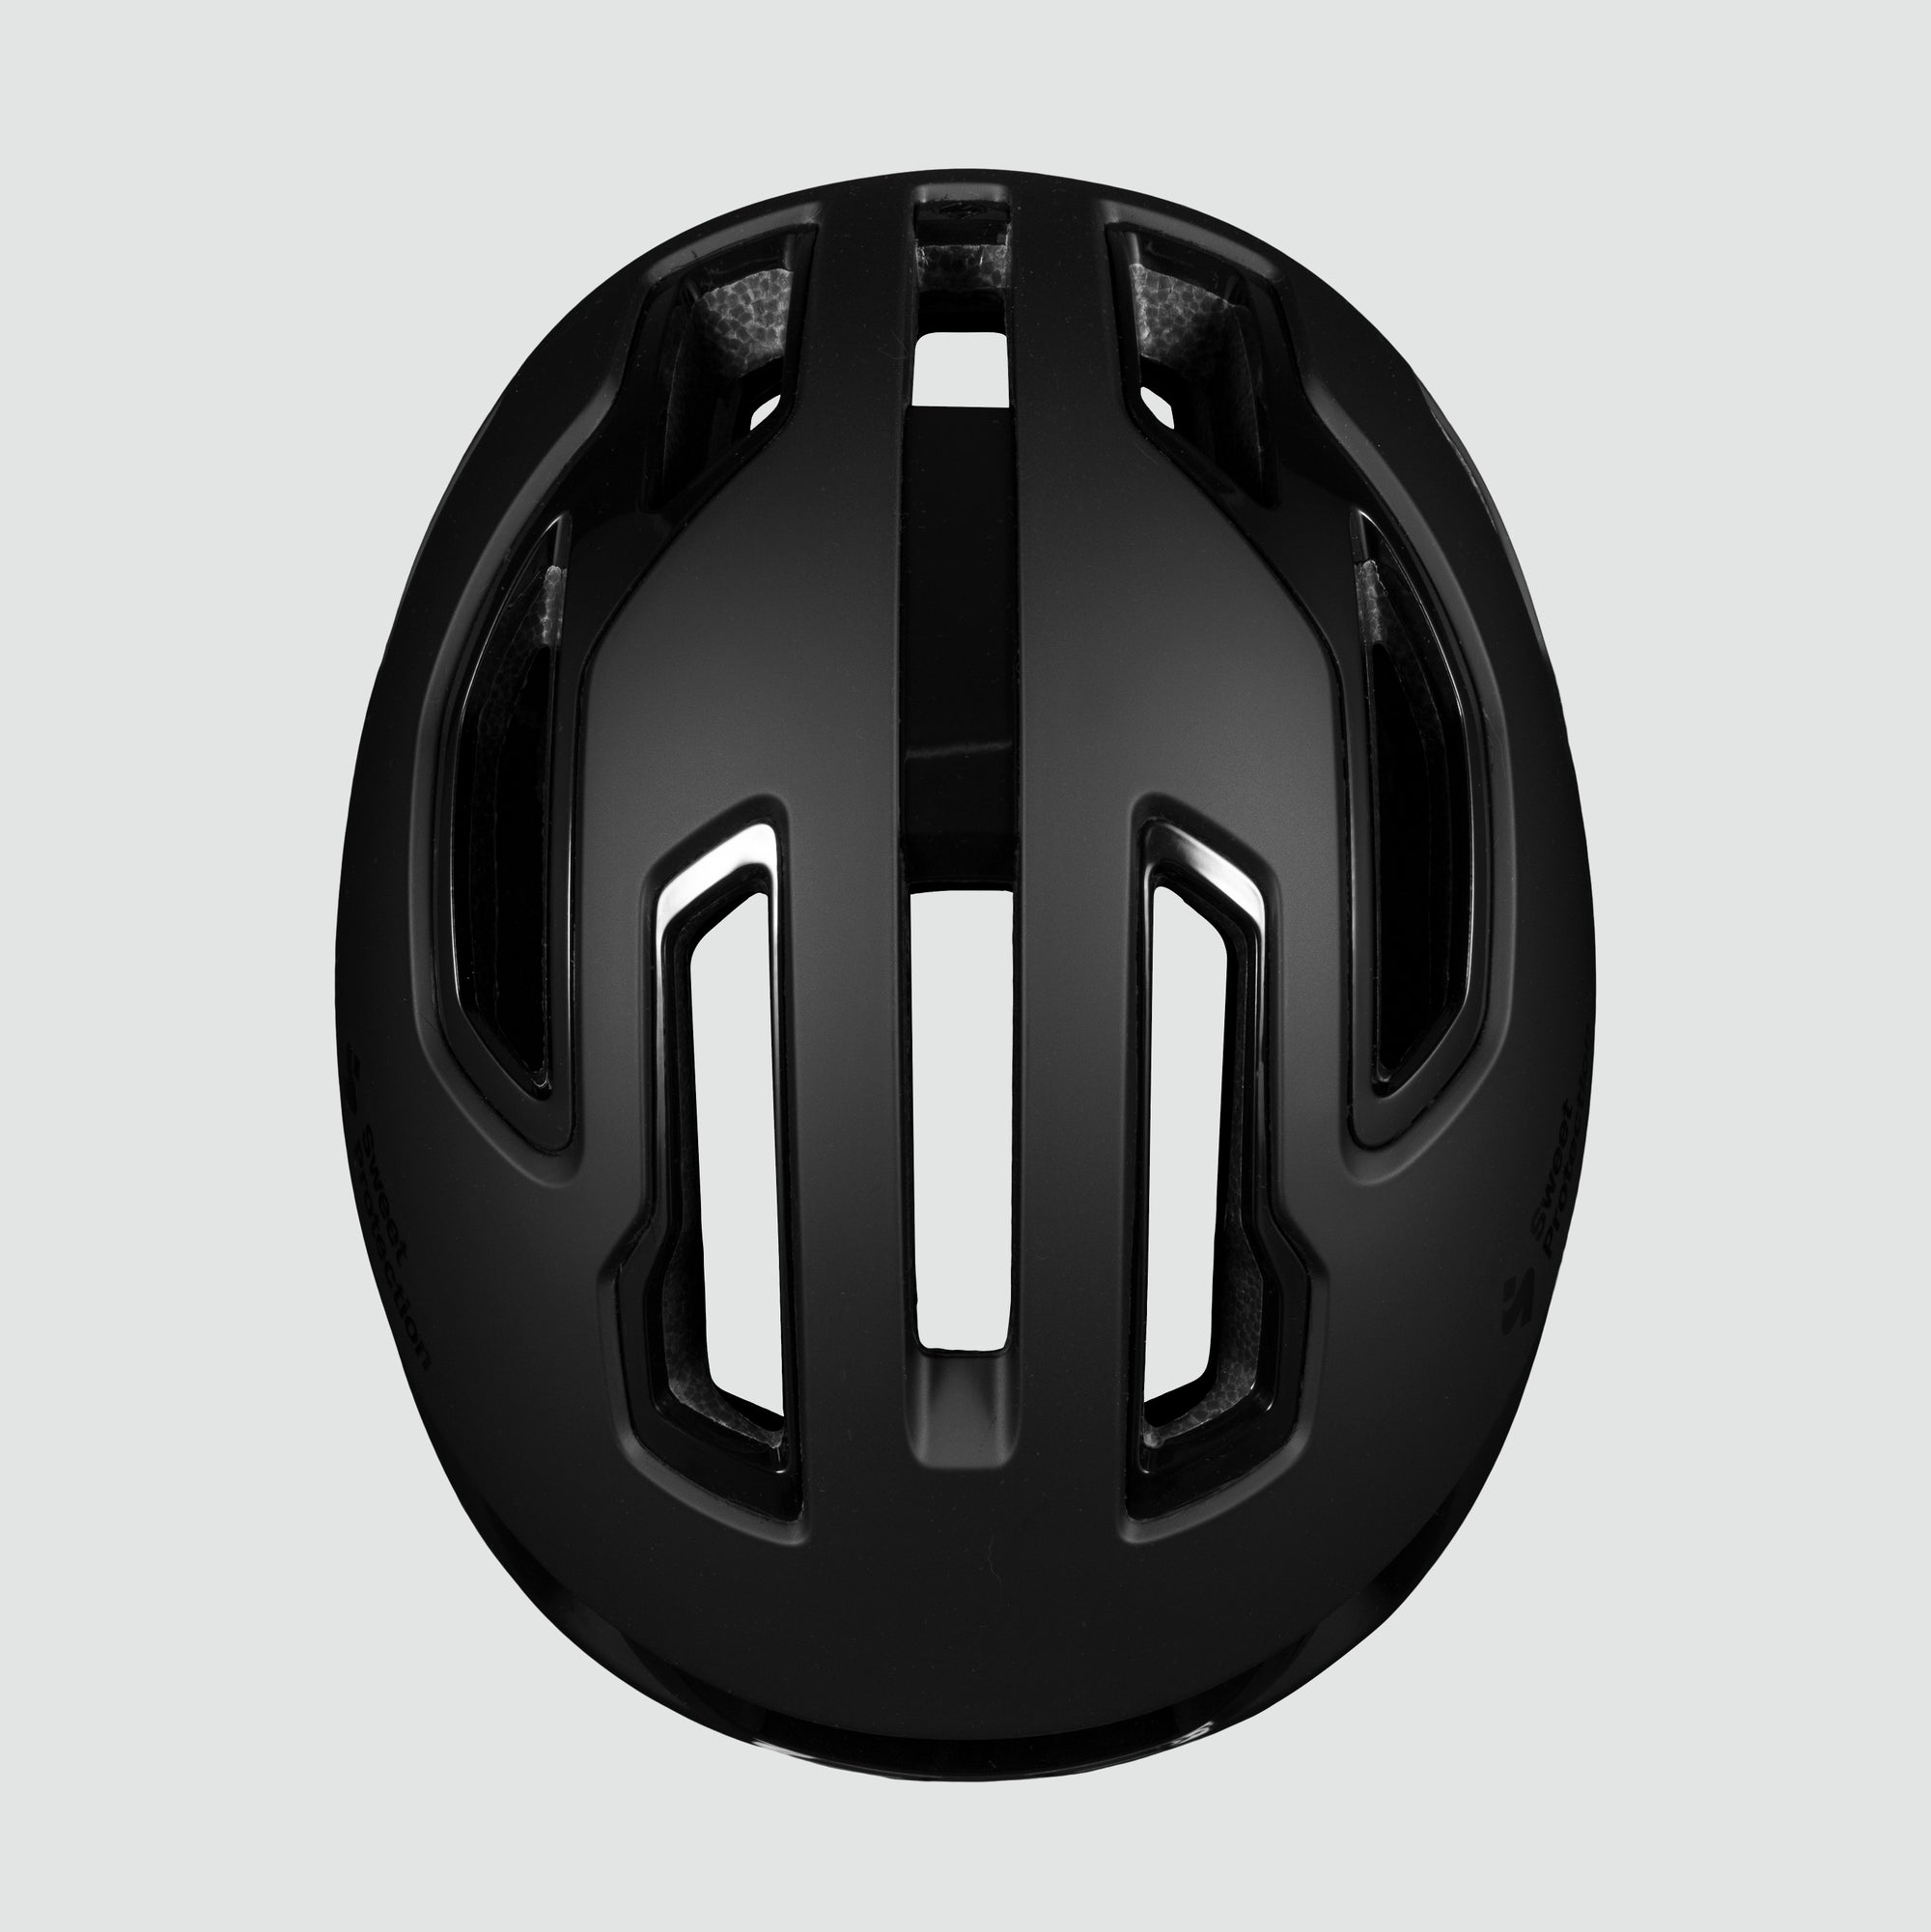 Falconer 2Vi Mips 頭盔 - 霧面黑色